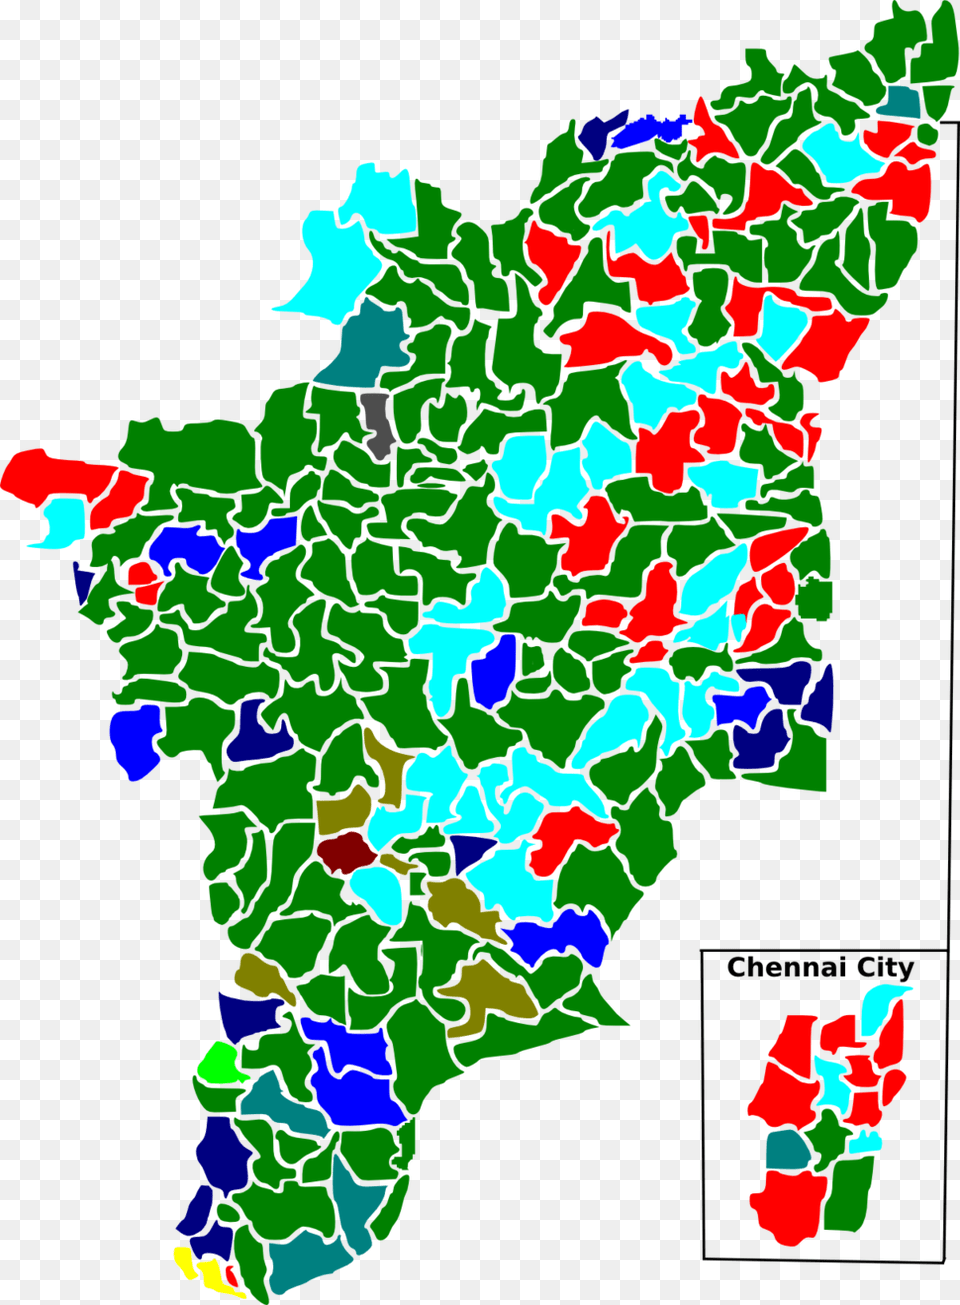 Tamil Nadu Legislative Election Map By Parties Tamil Nadu Mla Constituency Map, Chart, Plot, Atlas, Diagram Png